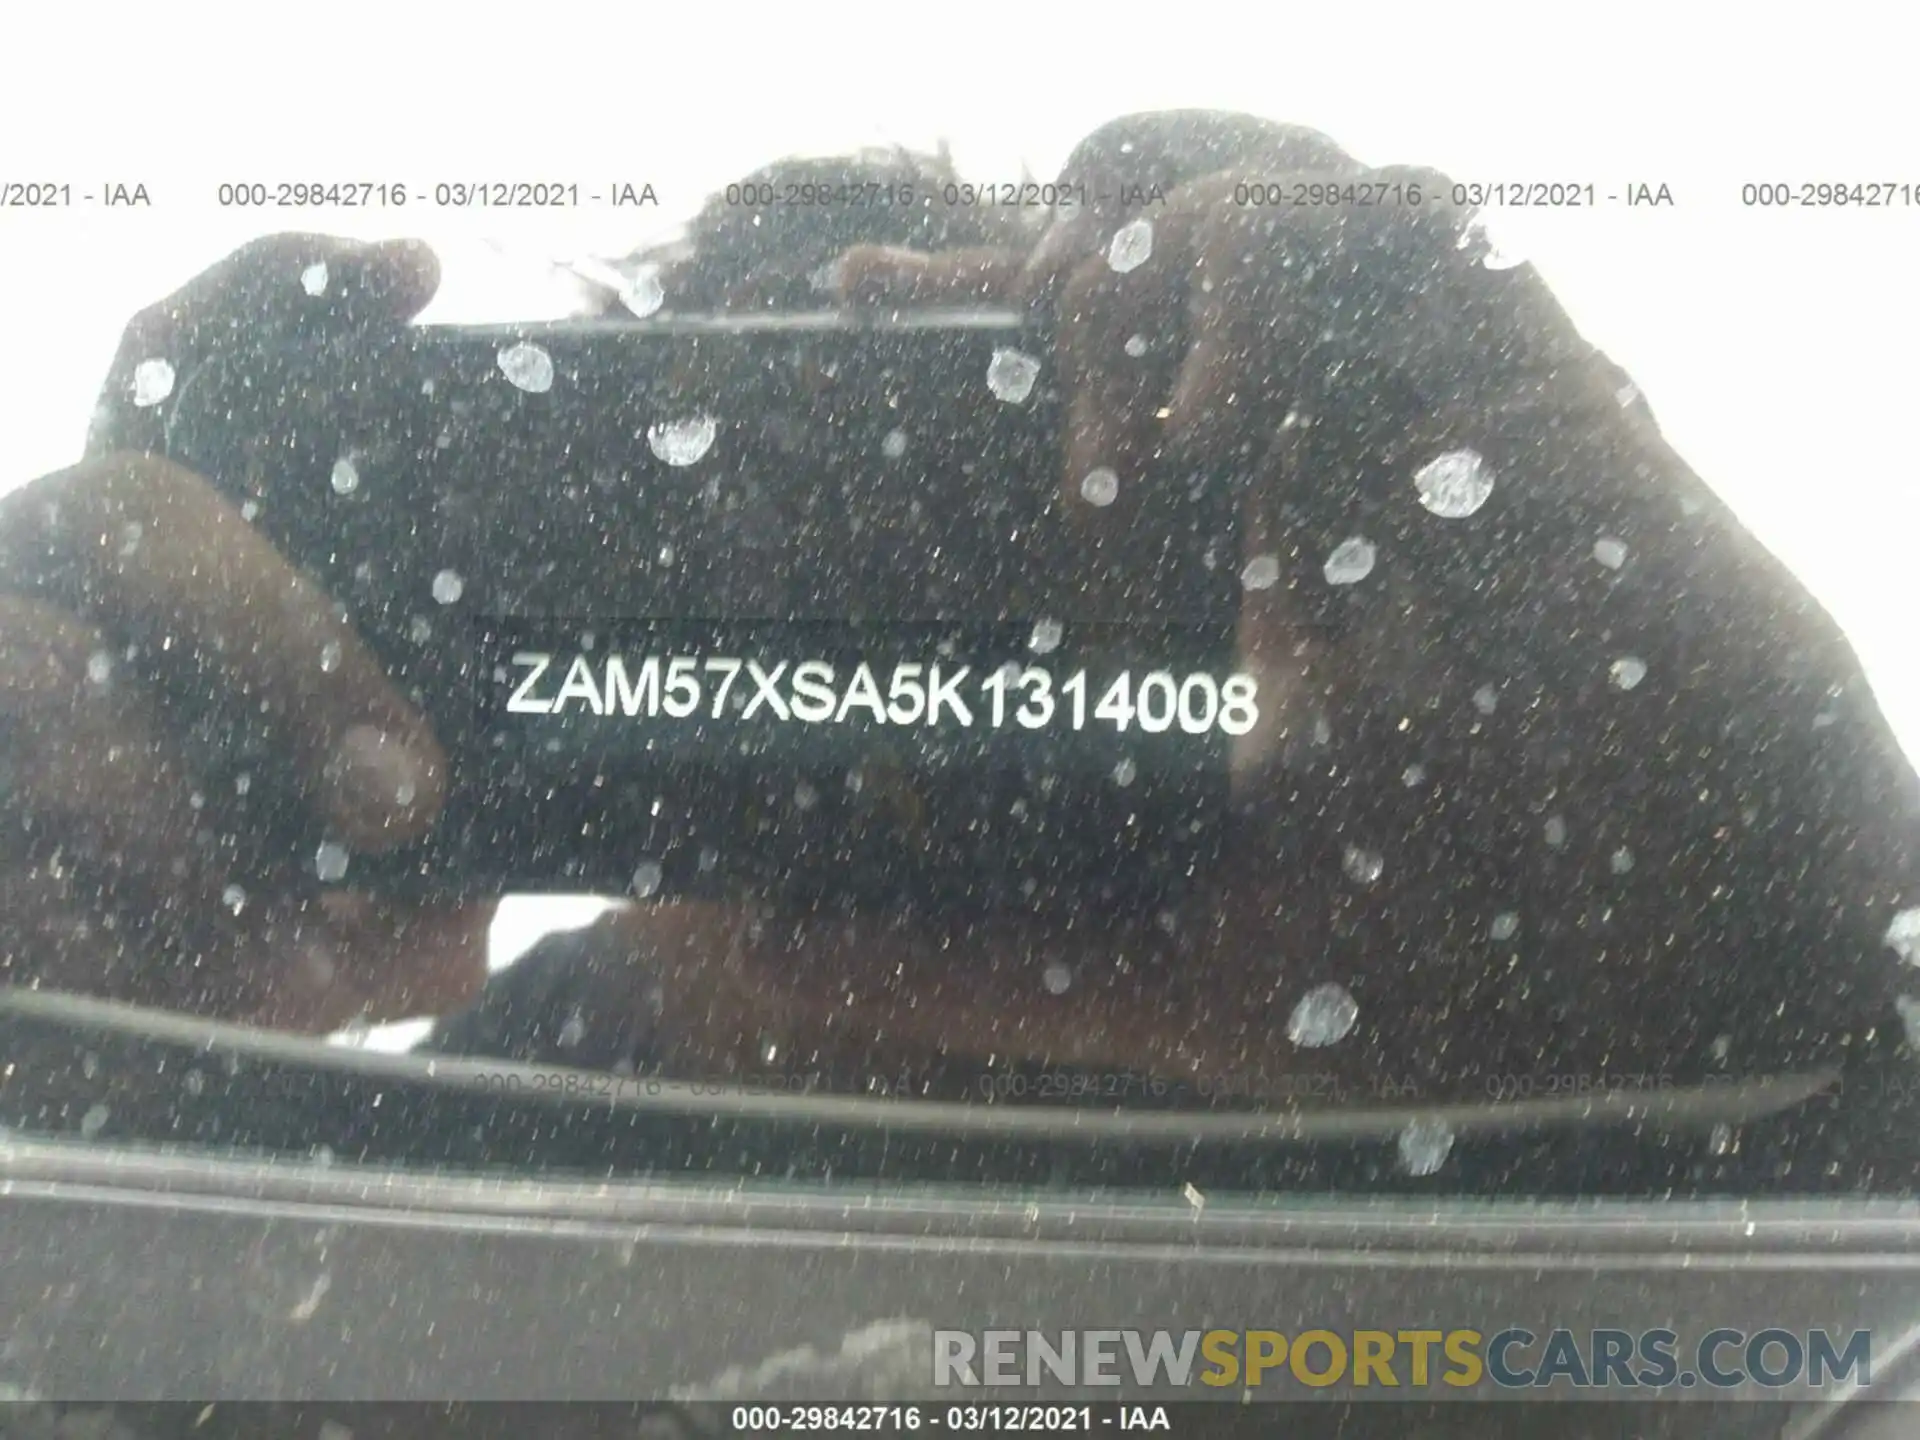 9 Фотография поврежденного автомобиля ZAM57XSA5K1314008 MASERATI GHIBLI 2019